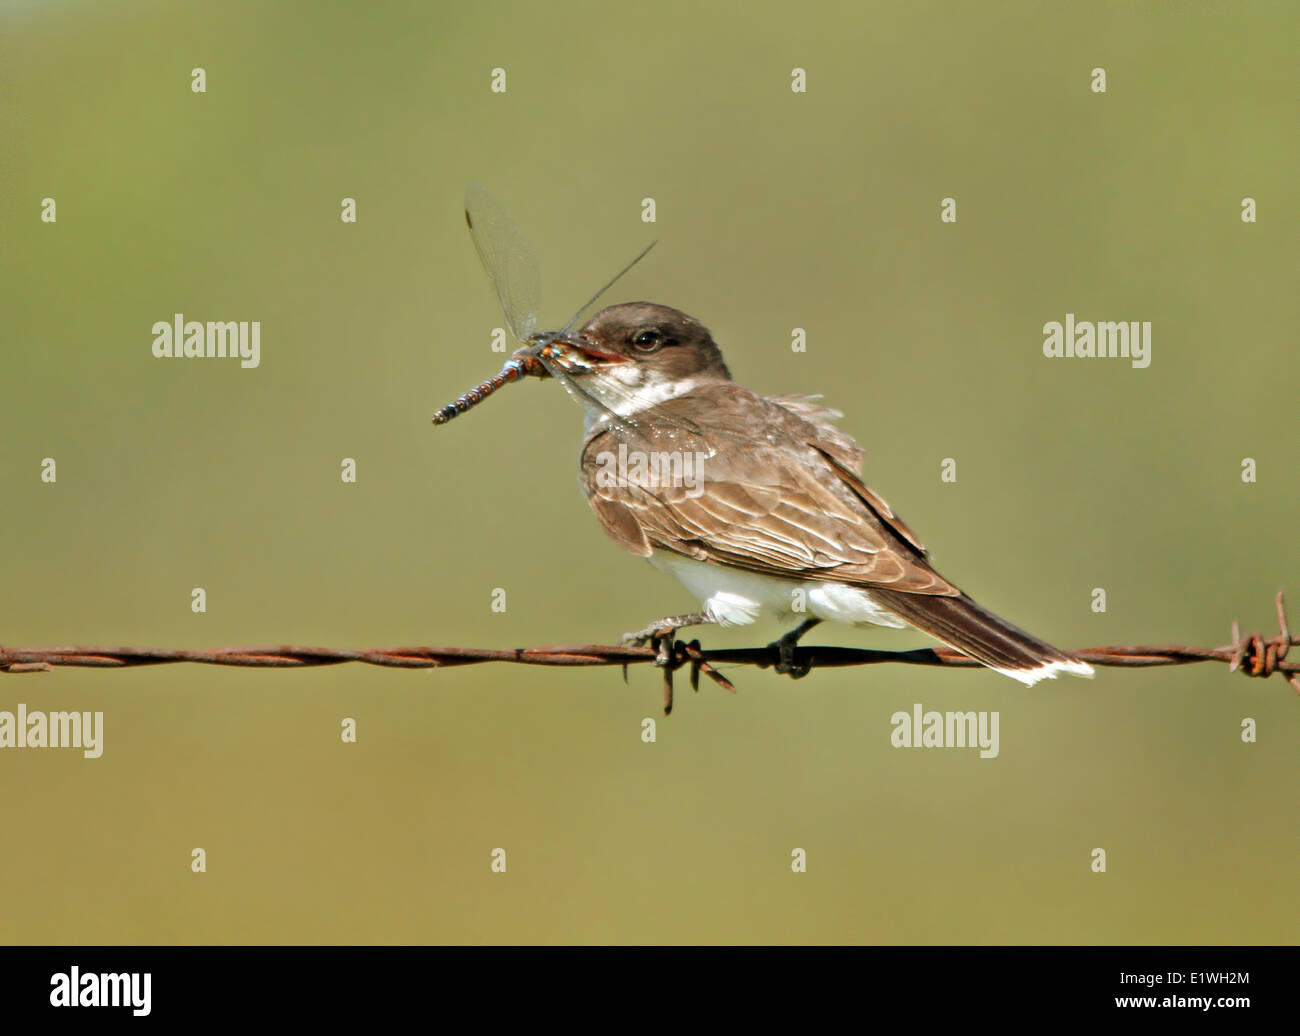 An Eastern Kingbird (Tyrannus tyrannus) eating a Dragonfly, perched on barbed wire, near Saskatoon, SK. Stock Photo